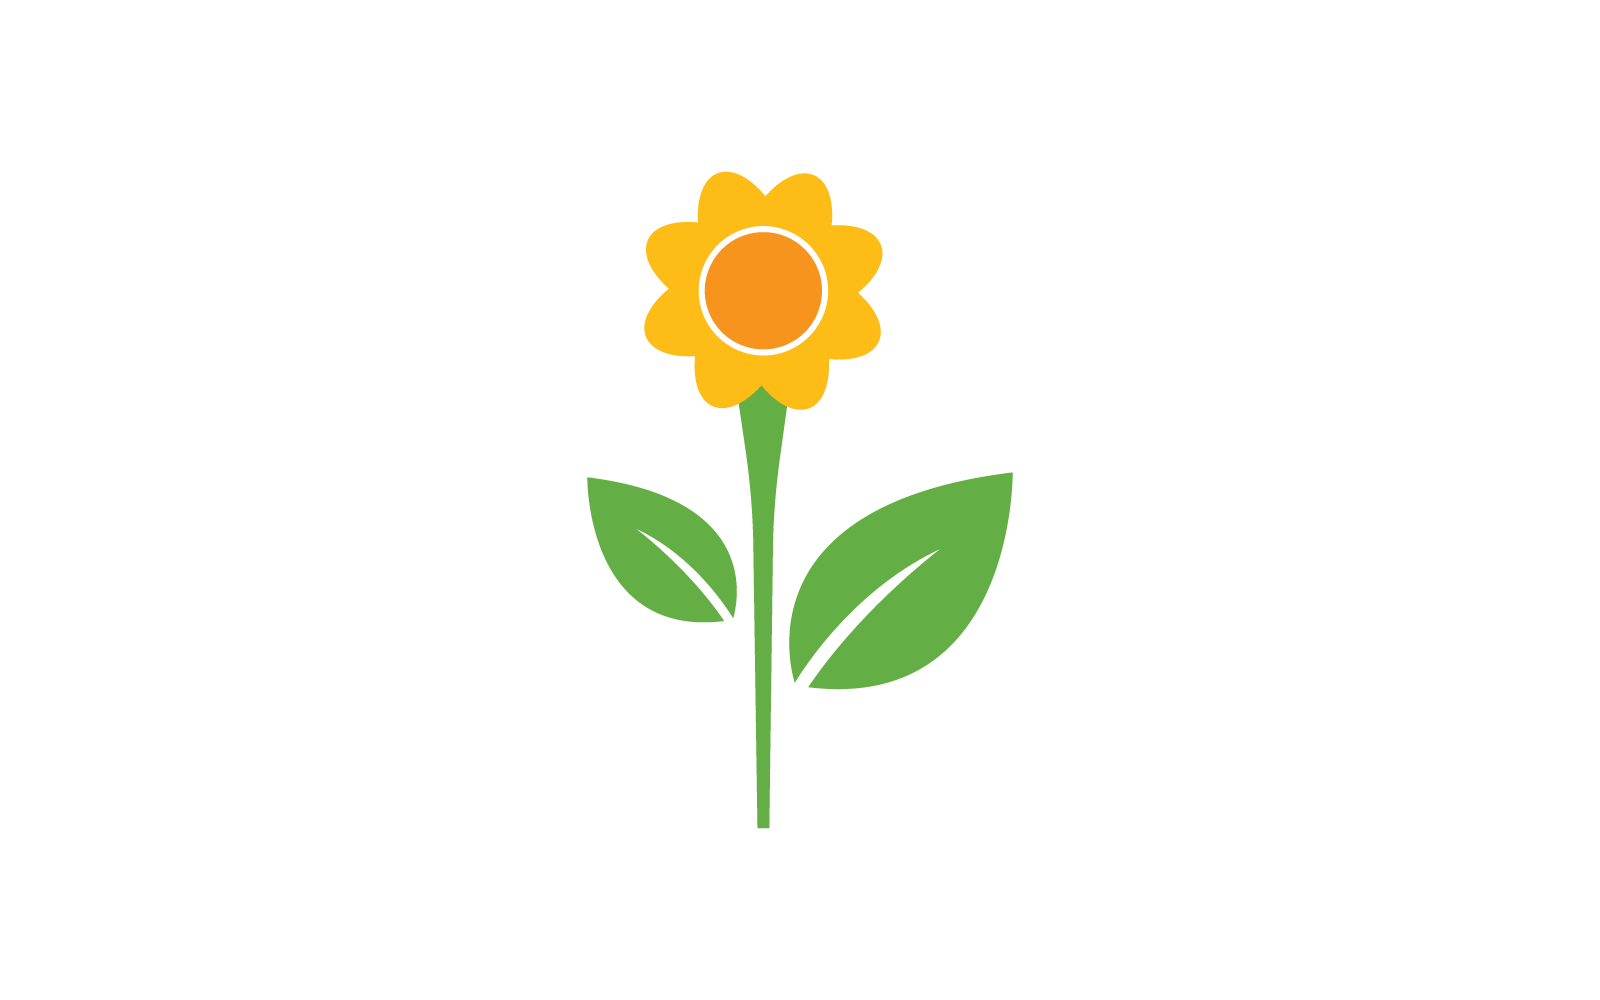 Sunflower vector design illustration template